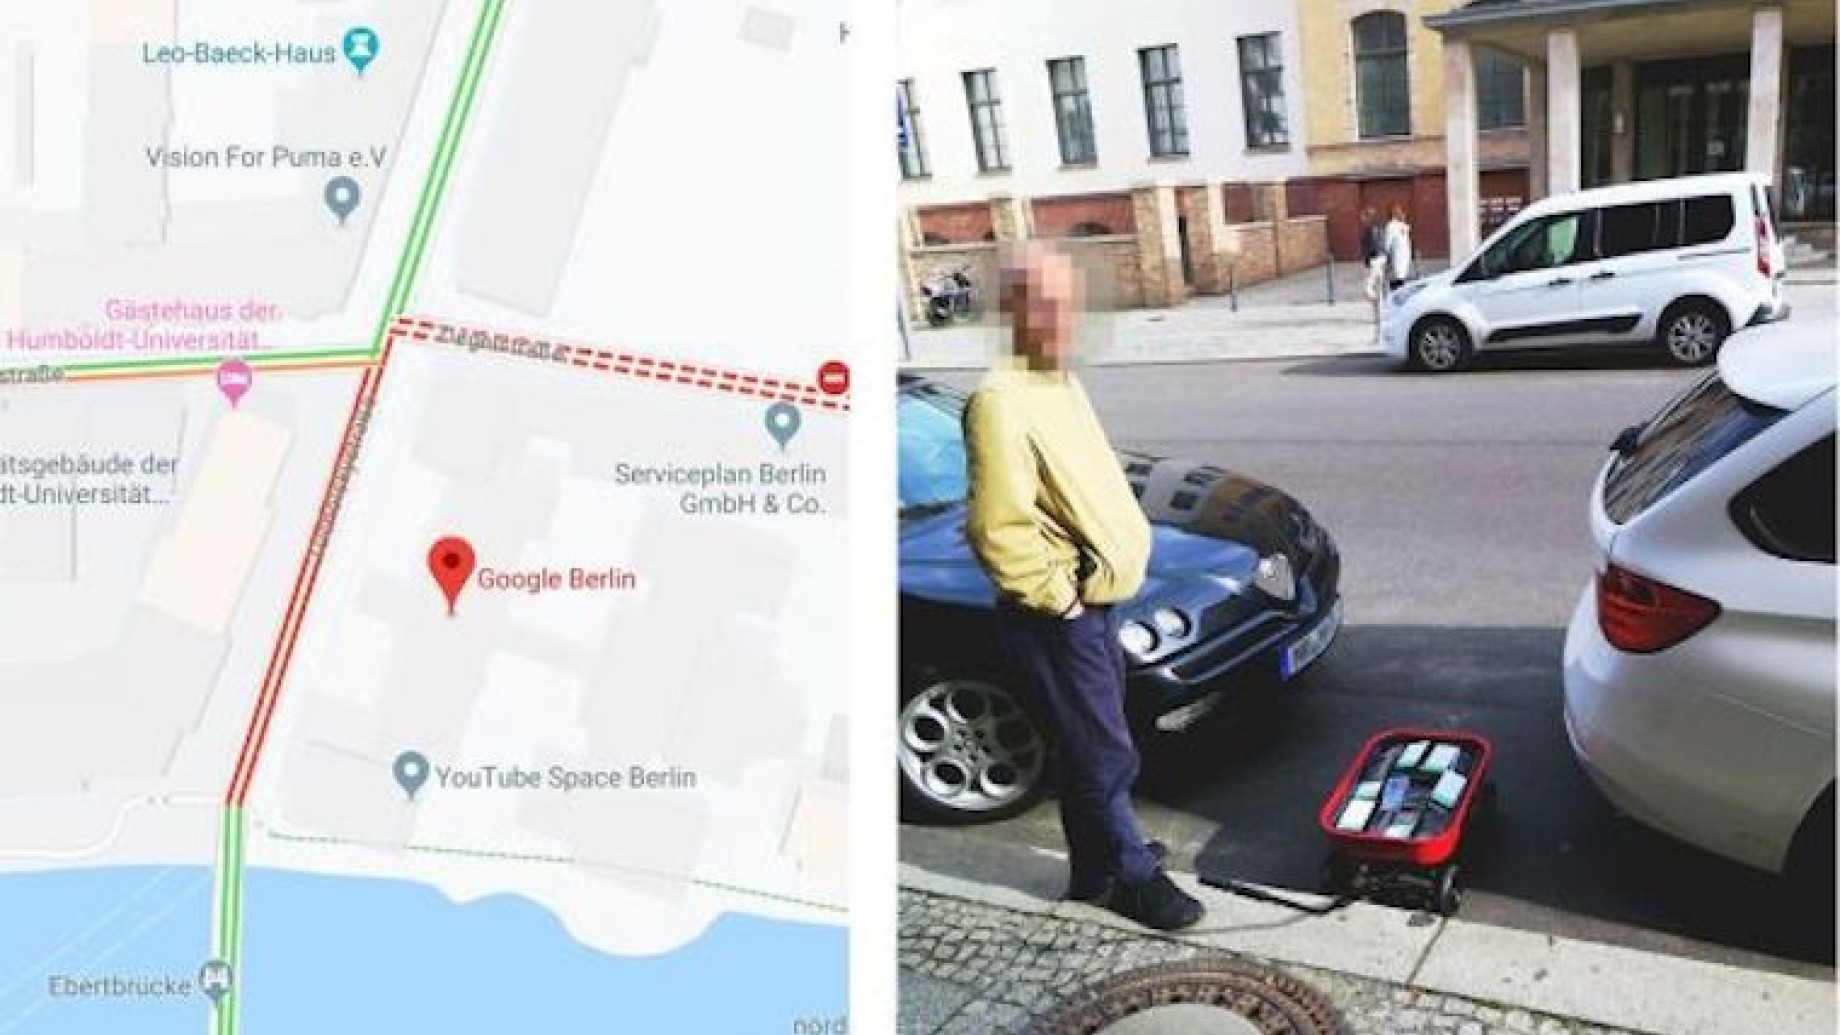 artista-inganna-google-maps-simula-traffico-con-99-telefoni-wide-fcg9k